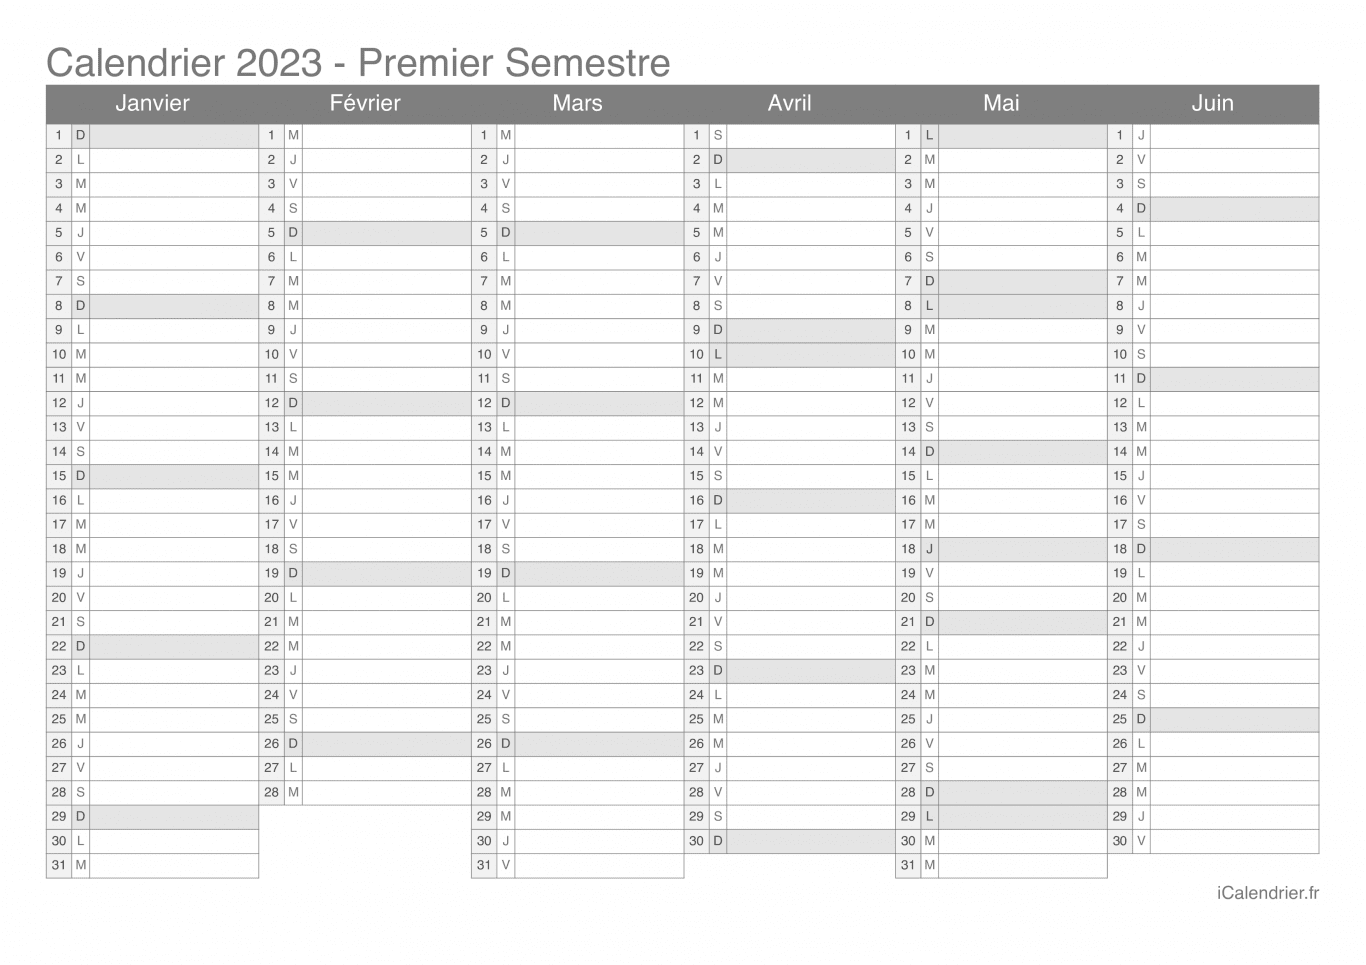 Calendrier par semestre 2023